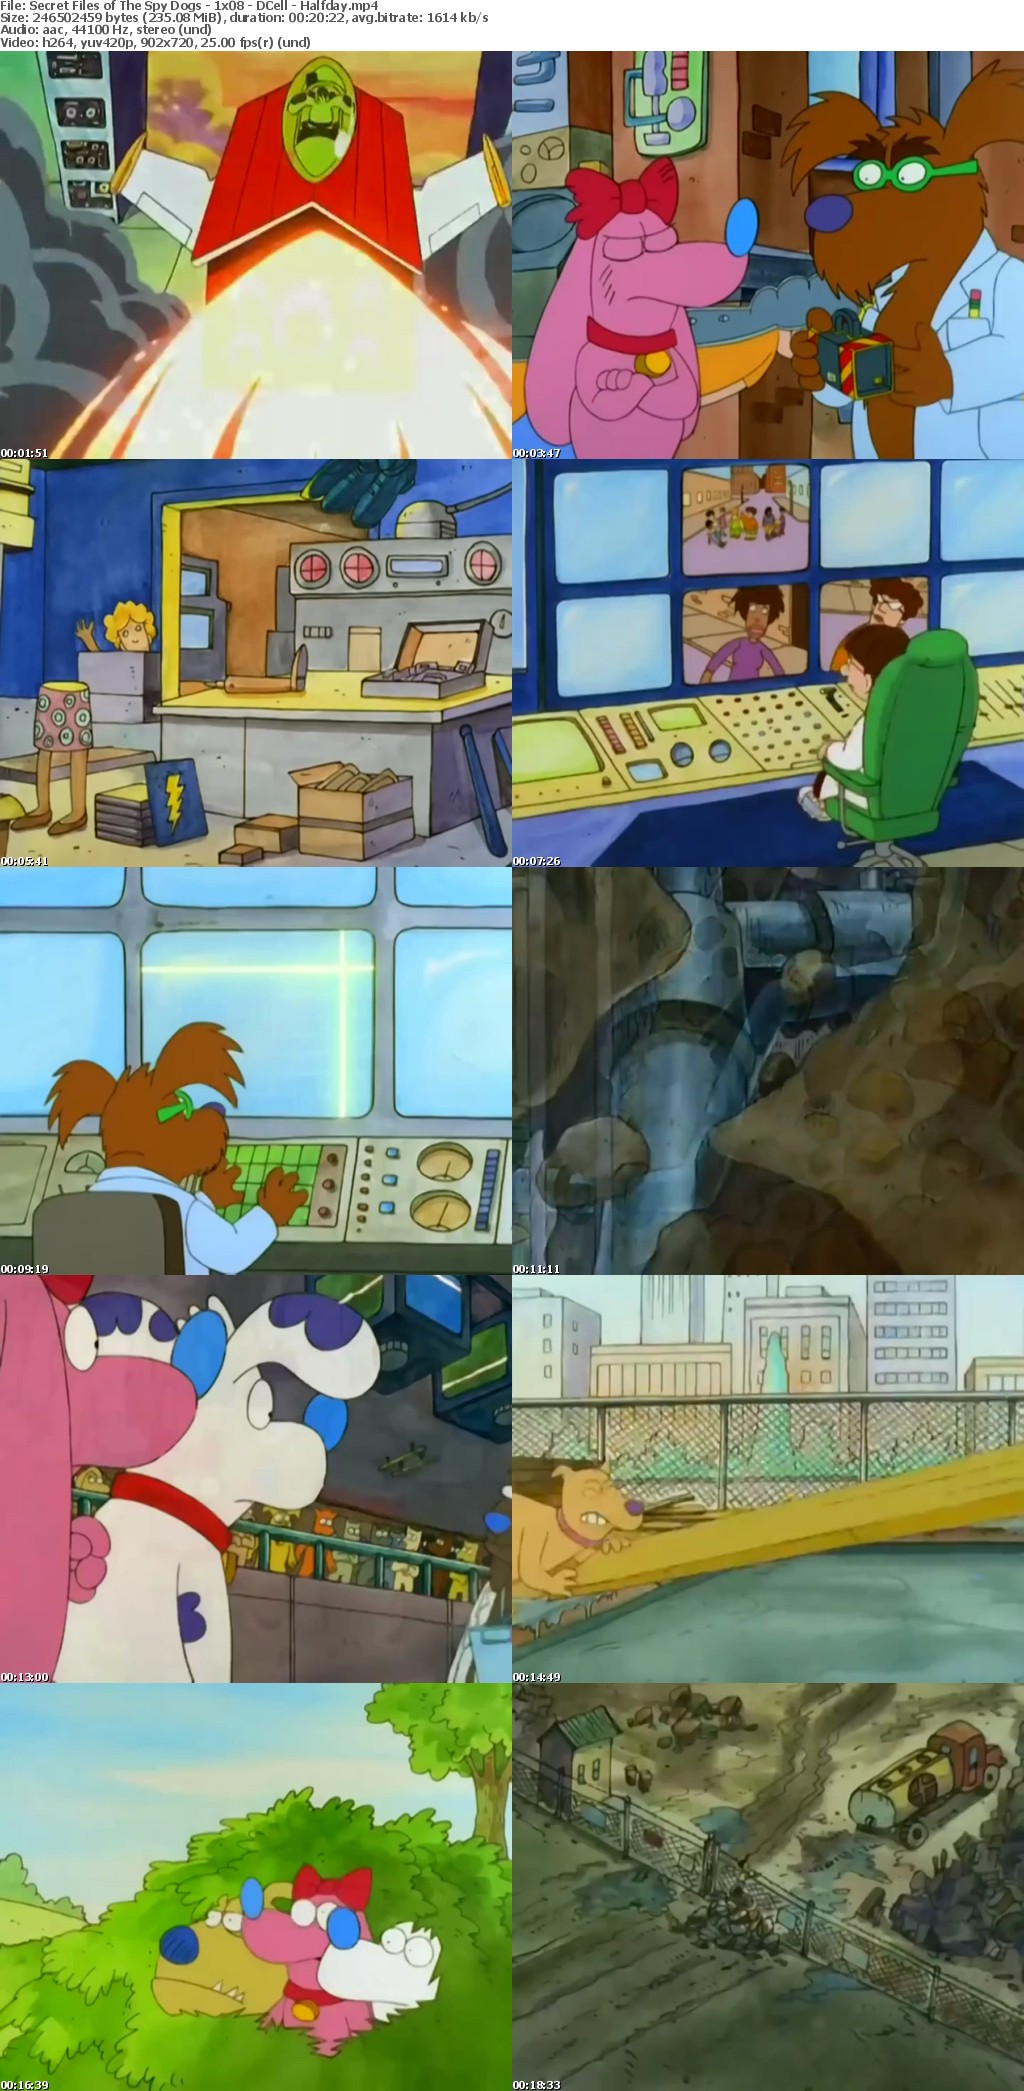 The Secret Files of the SpyDogs Complete Animated TV Series thealexgoaga